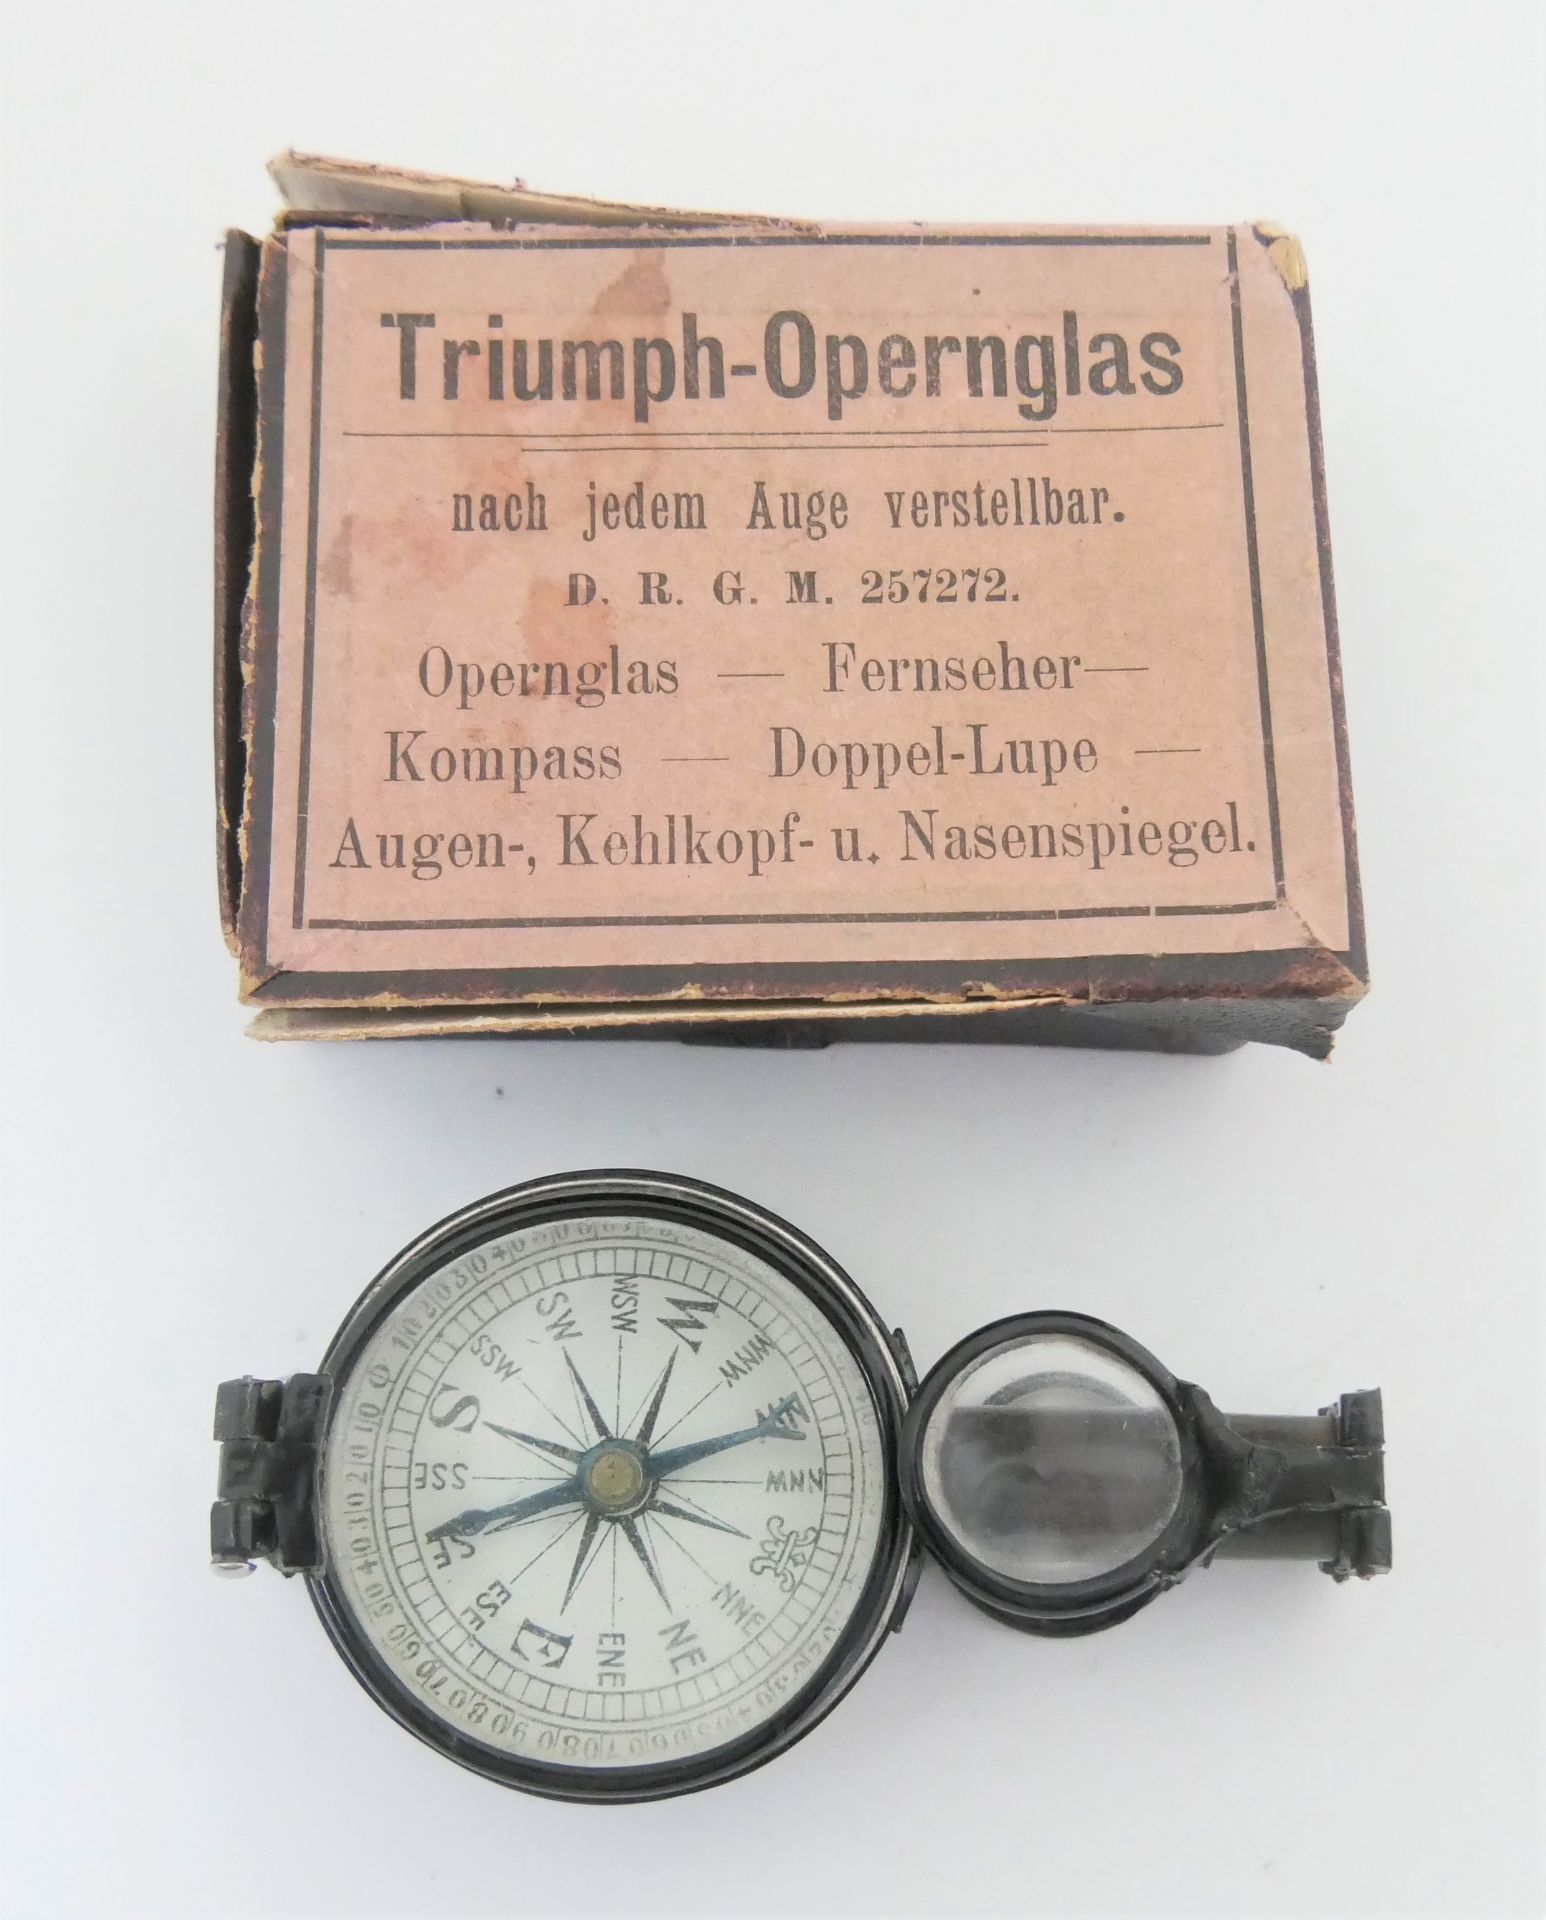 Triumph - Opernglas. D.R.G.M. 257272. Opernglas, Fernseher, Kompass, Doppel Lupe, Augen-,